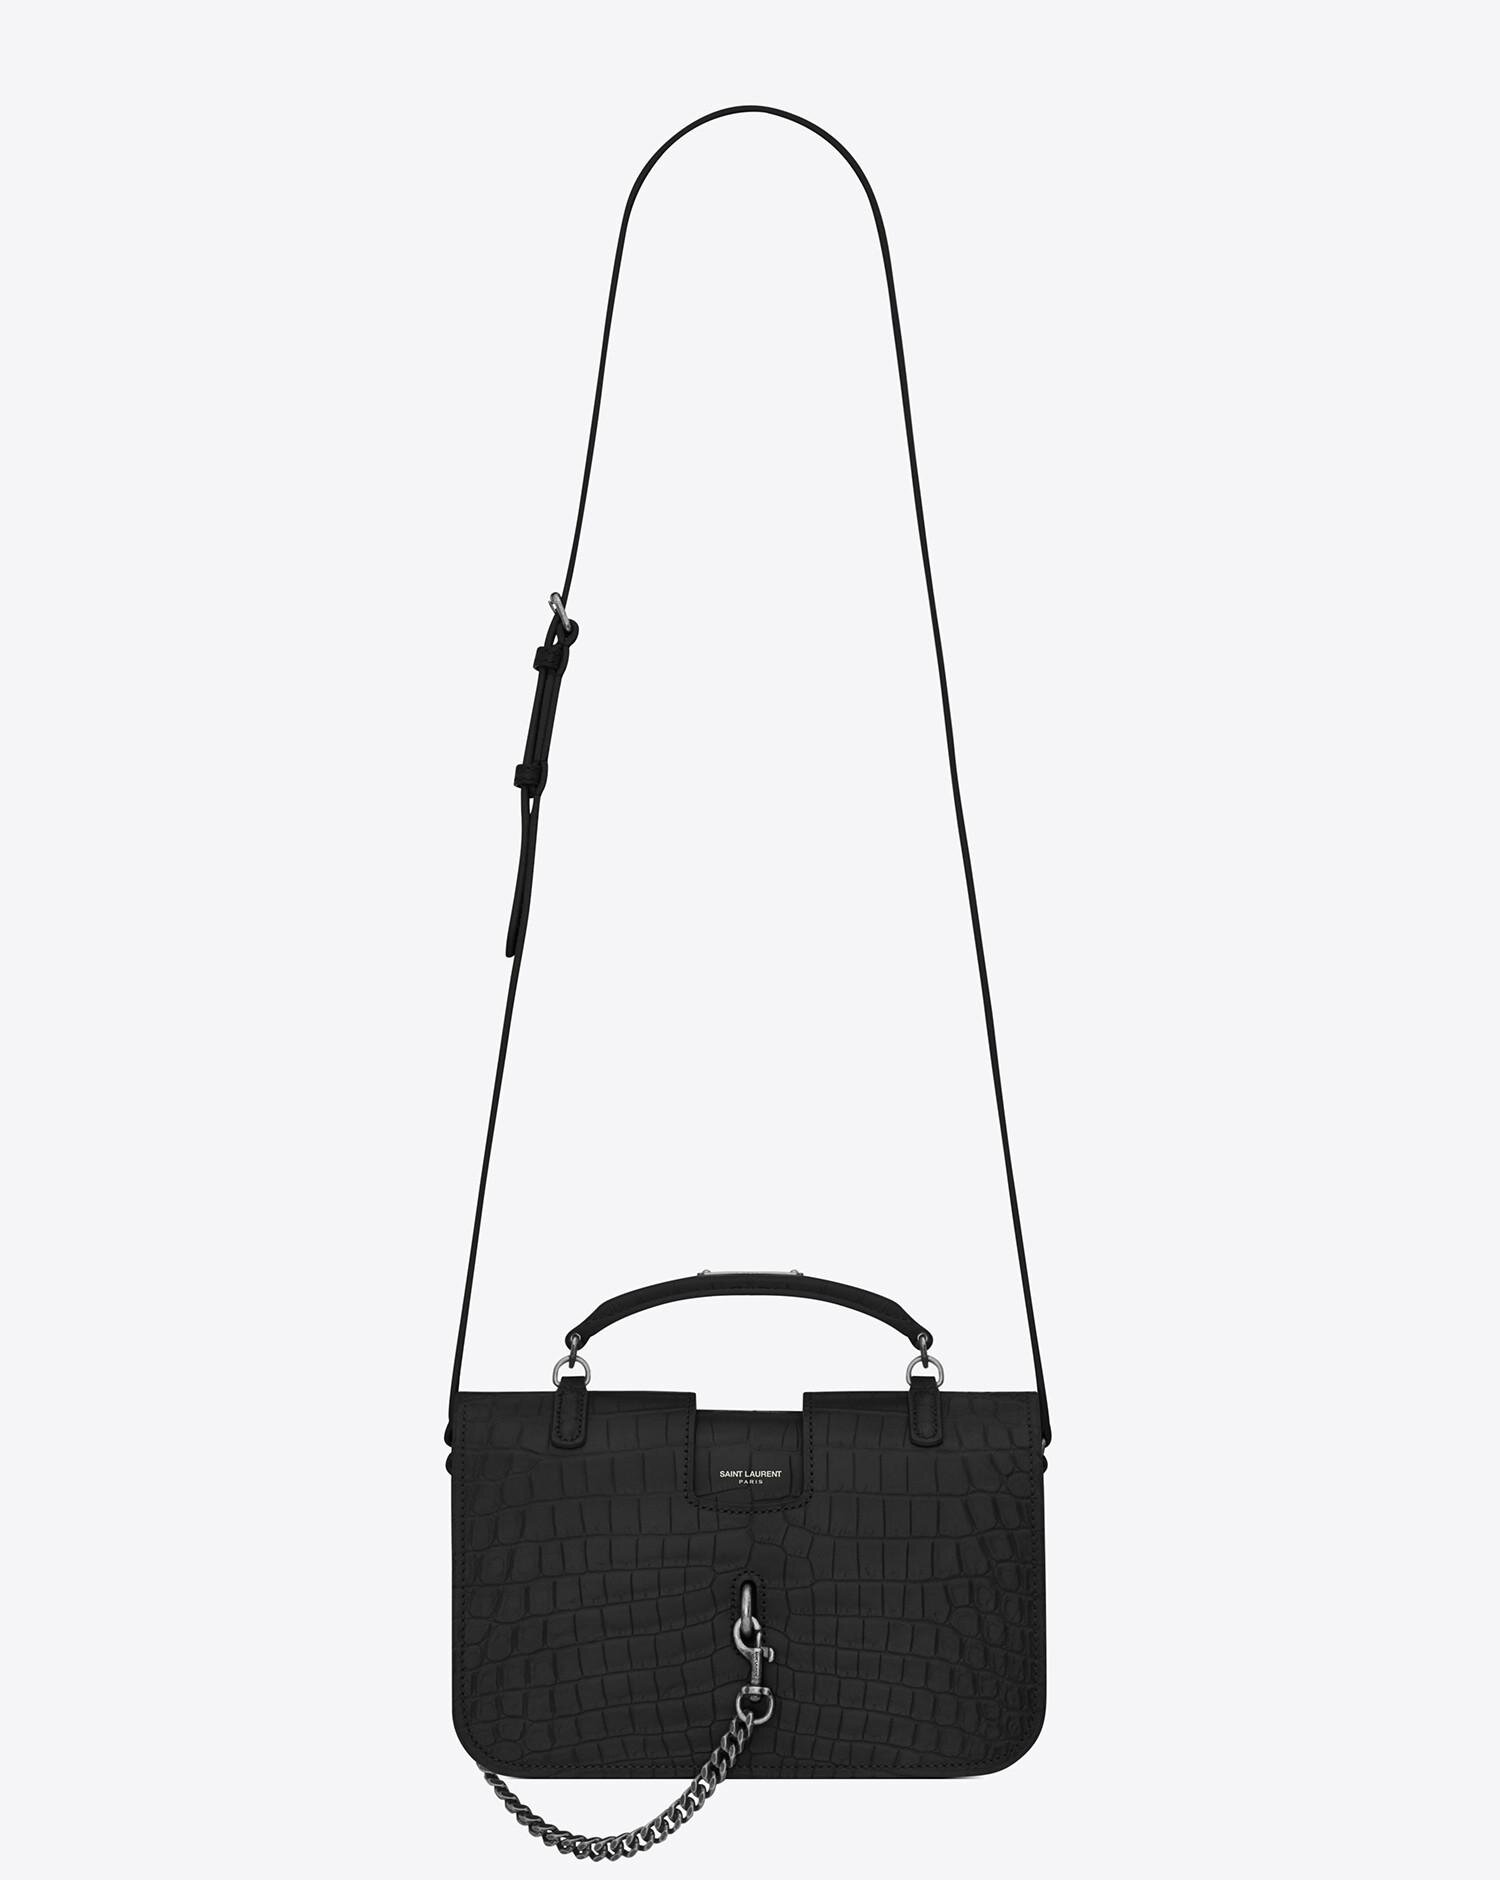 Saint Laurent Charlotte Messenger Bag in Black Crocodile Embossed Leather.jpg